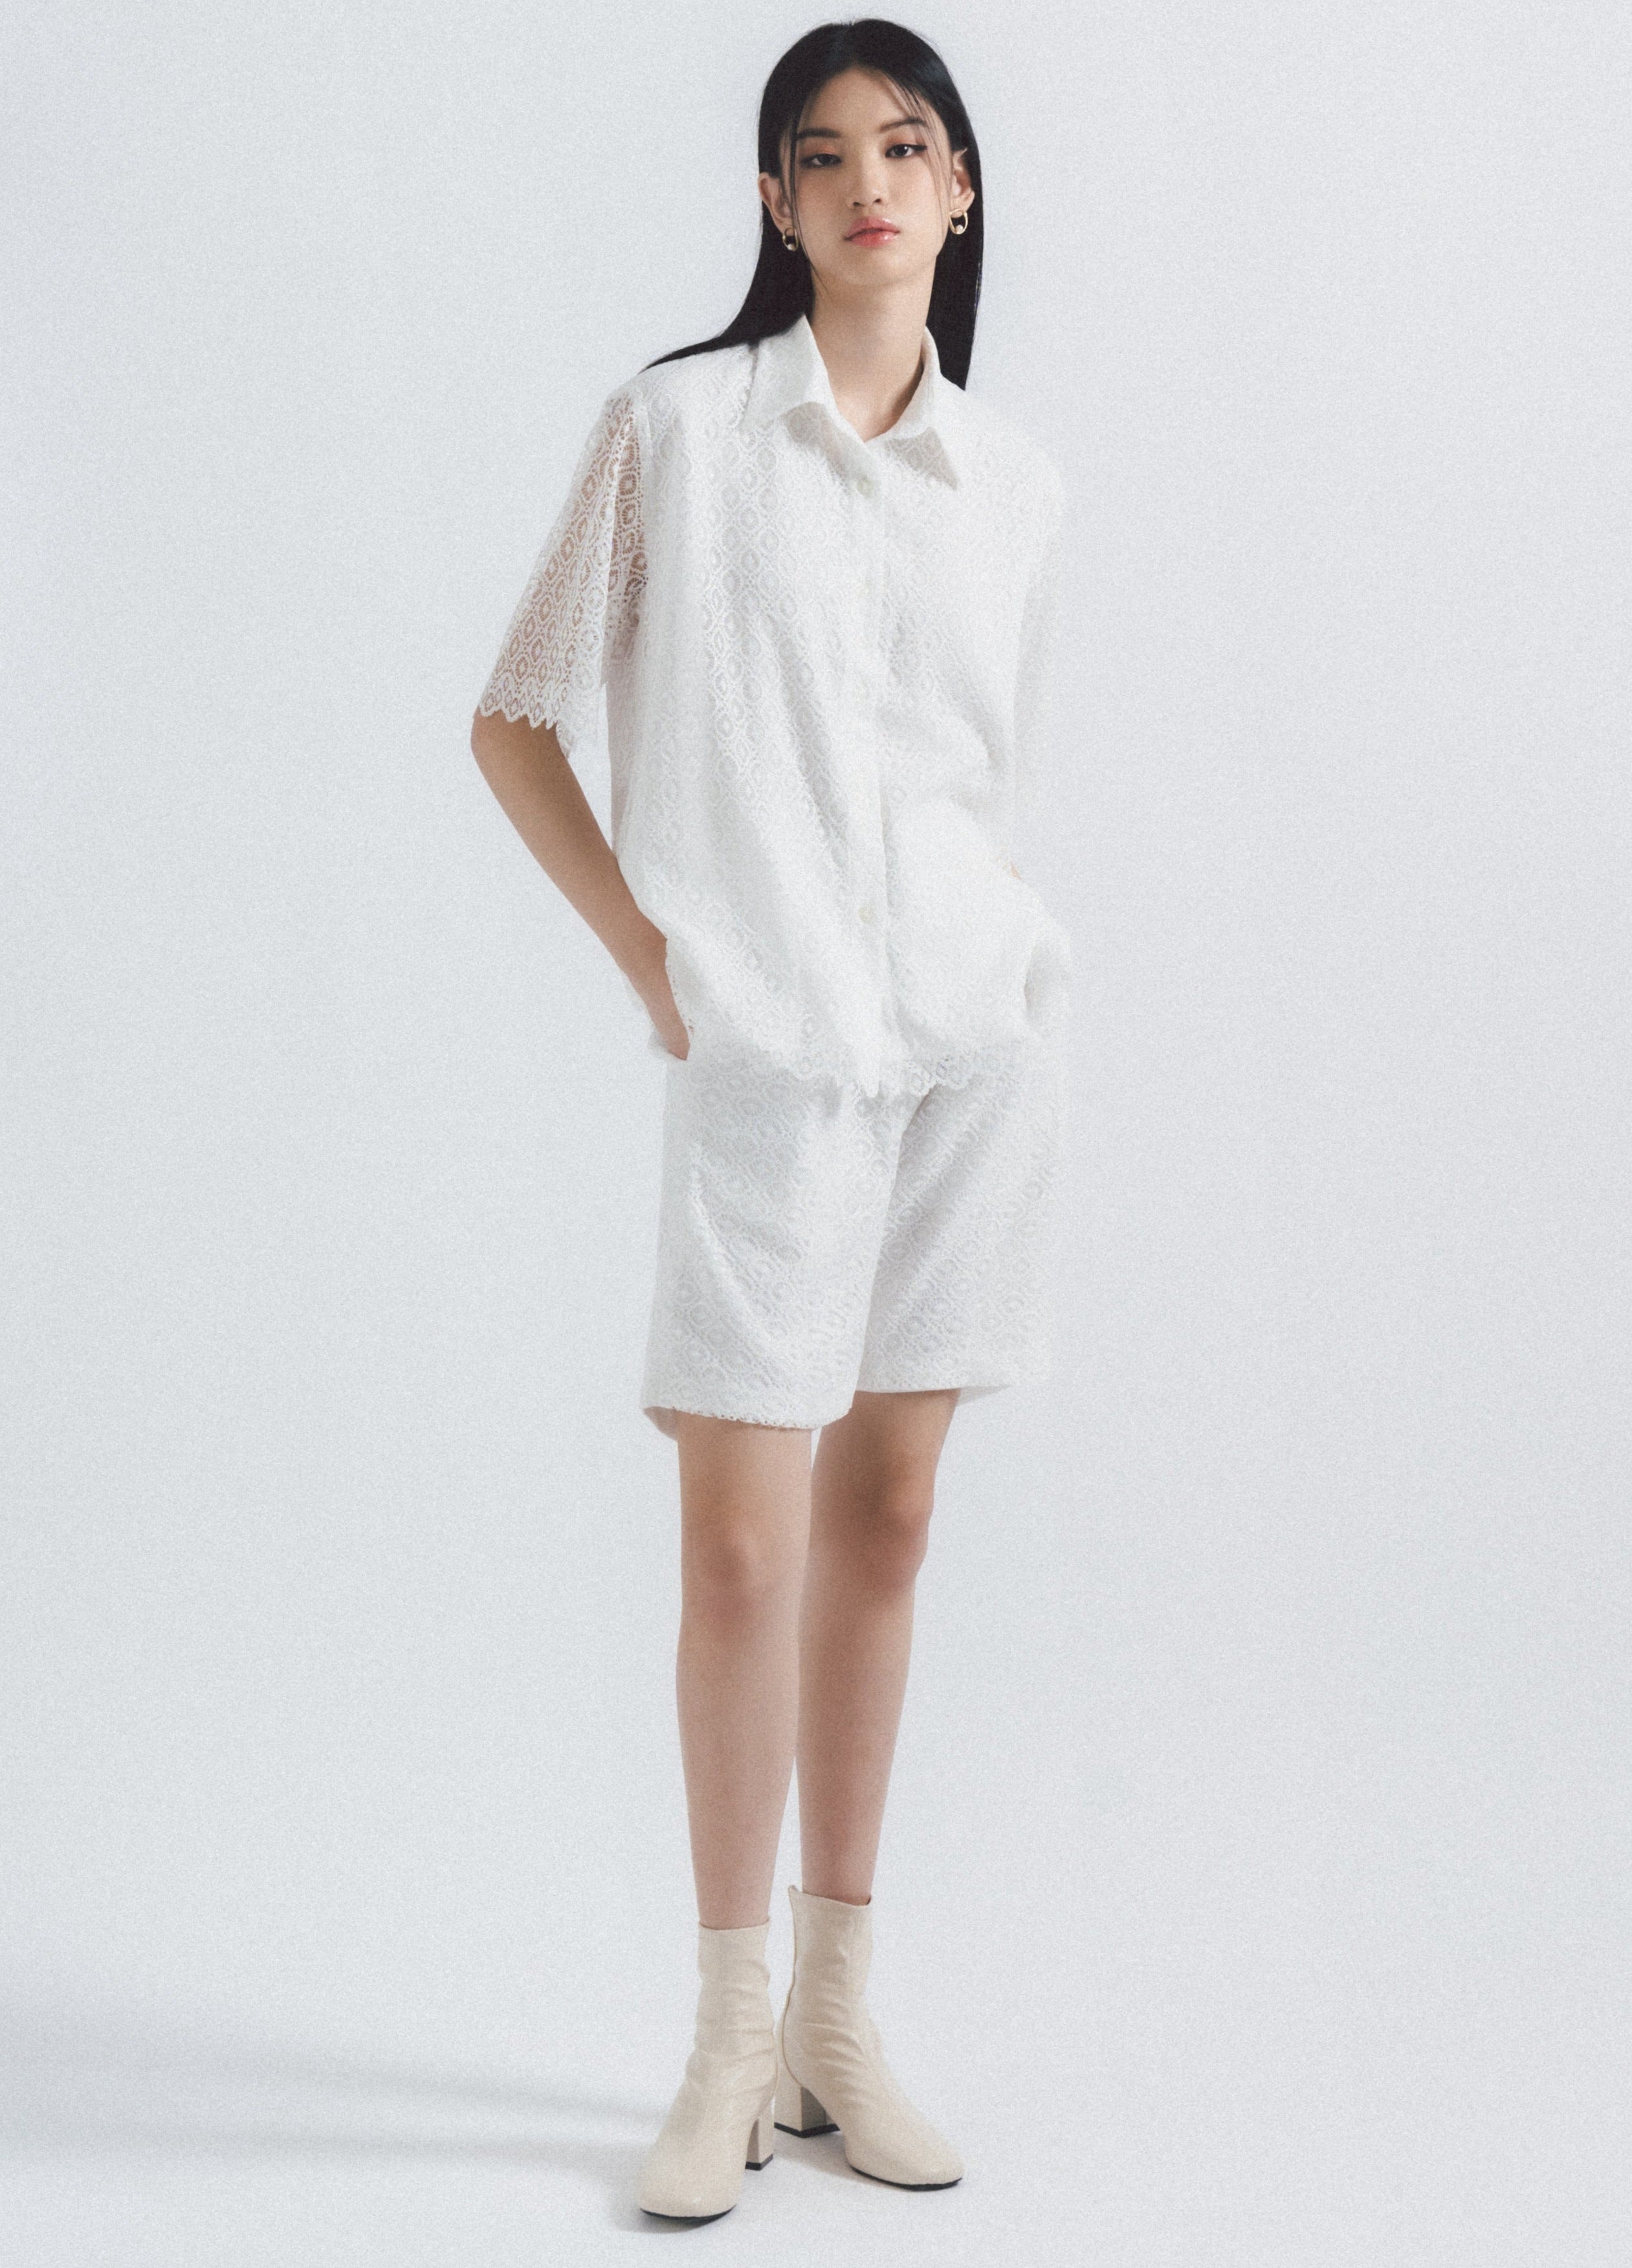 Mille Lace Shirt In White (4Left-Bestseller!)